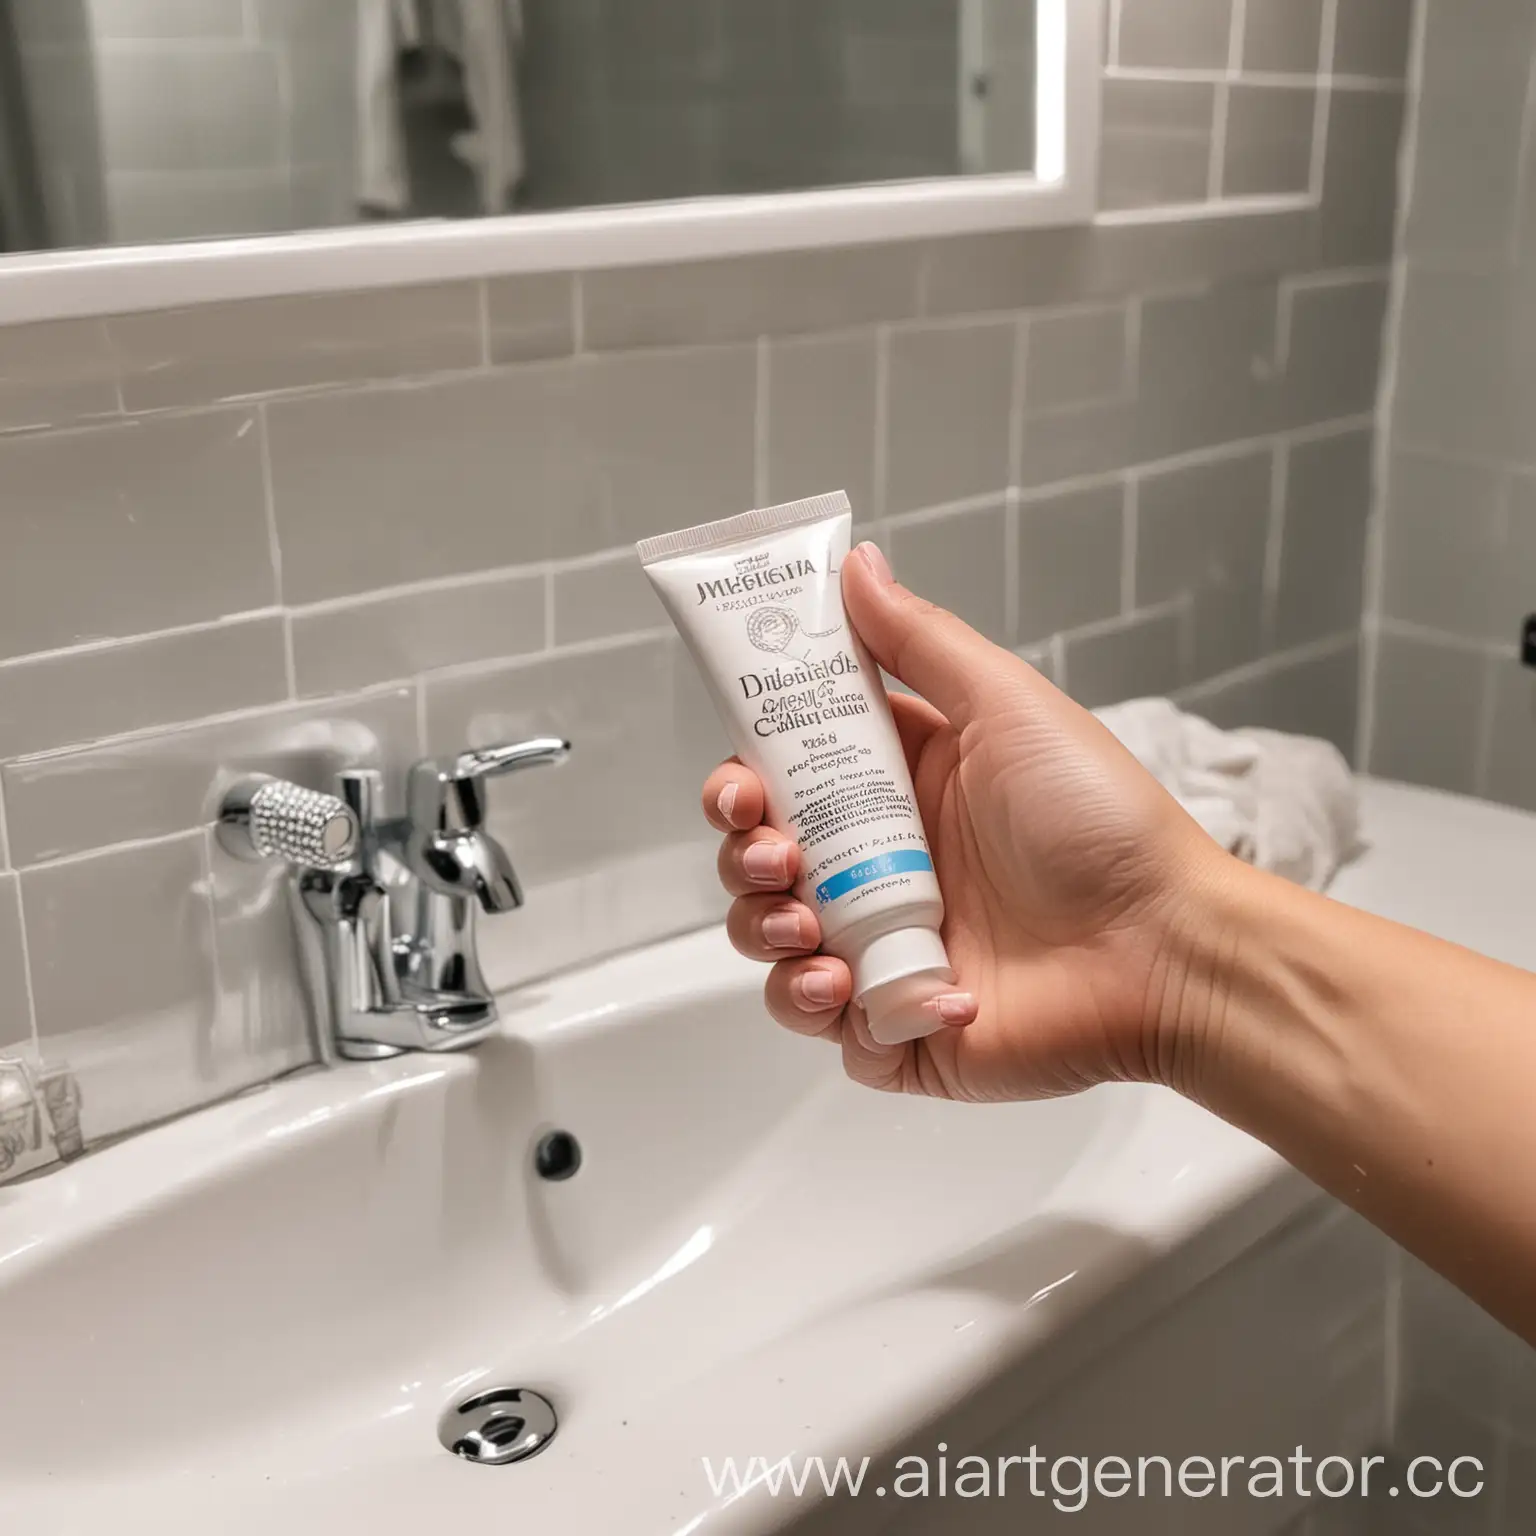 Moisturizing-Routine-Applying-Hand-Cream-in-the-Bathroom